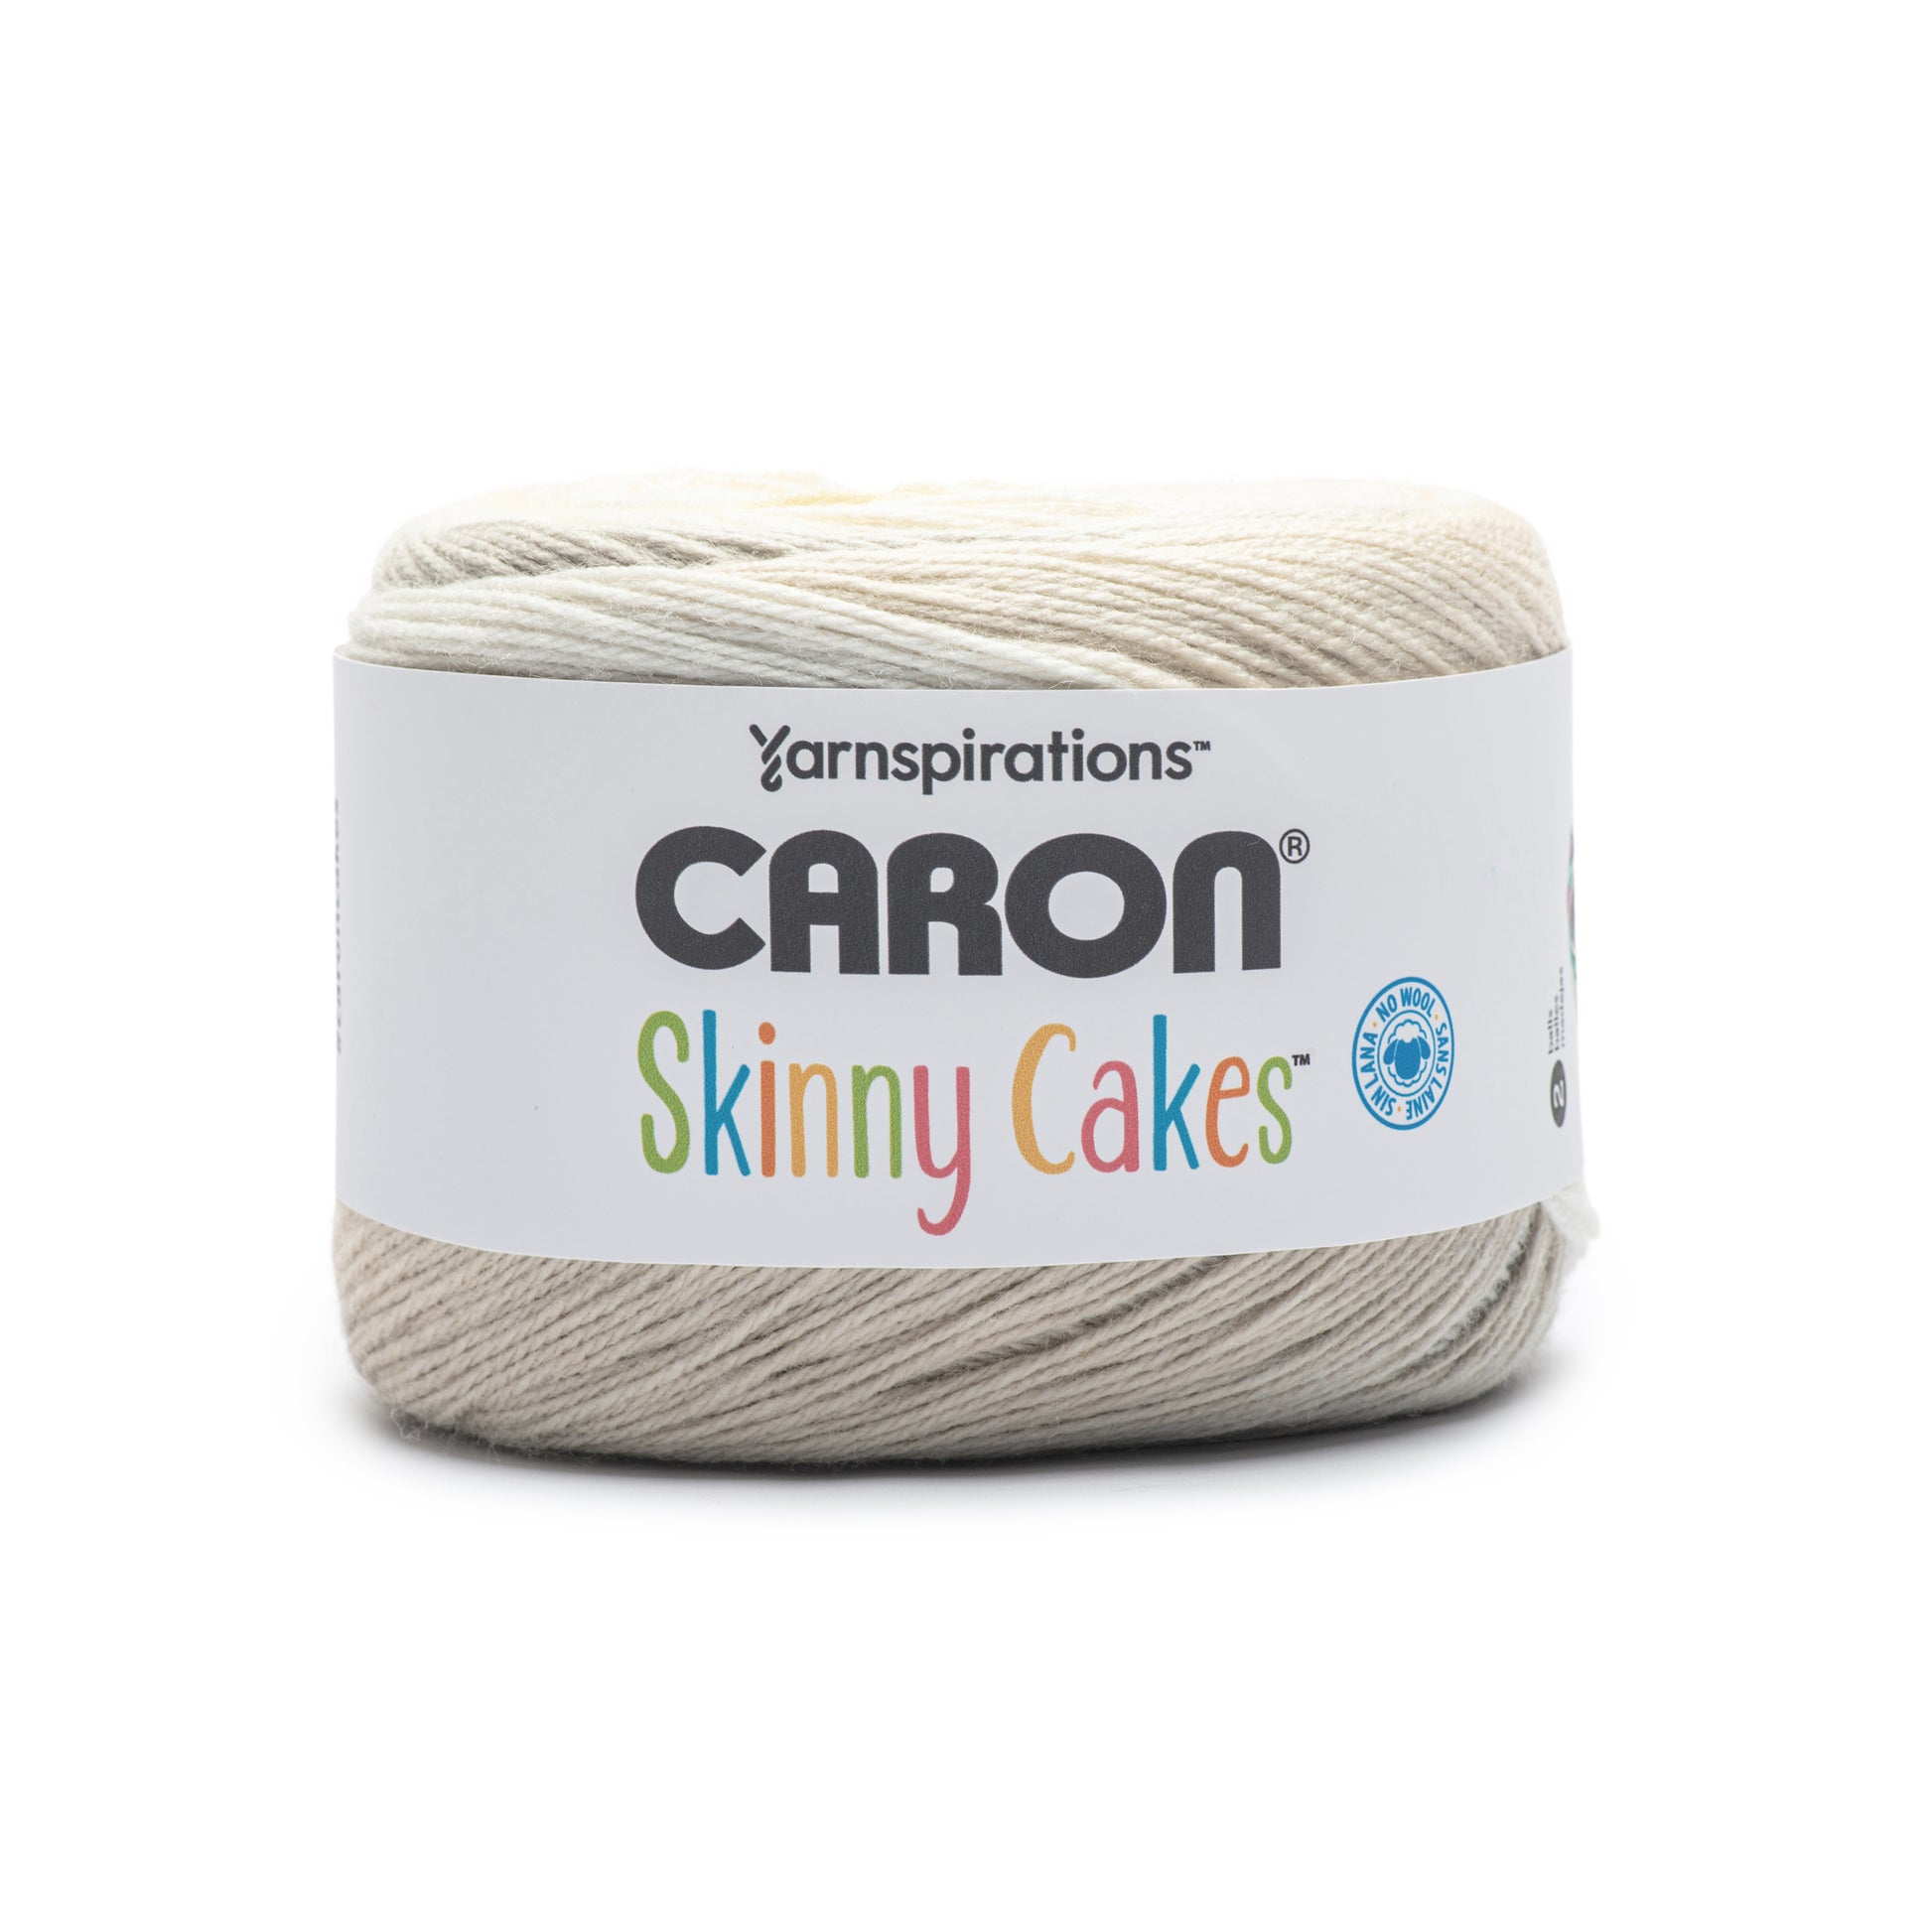 Caron Skinny Cakes Yarn